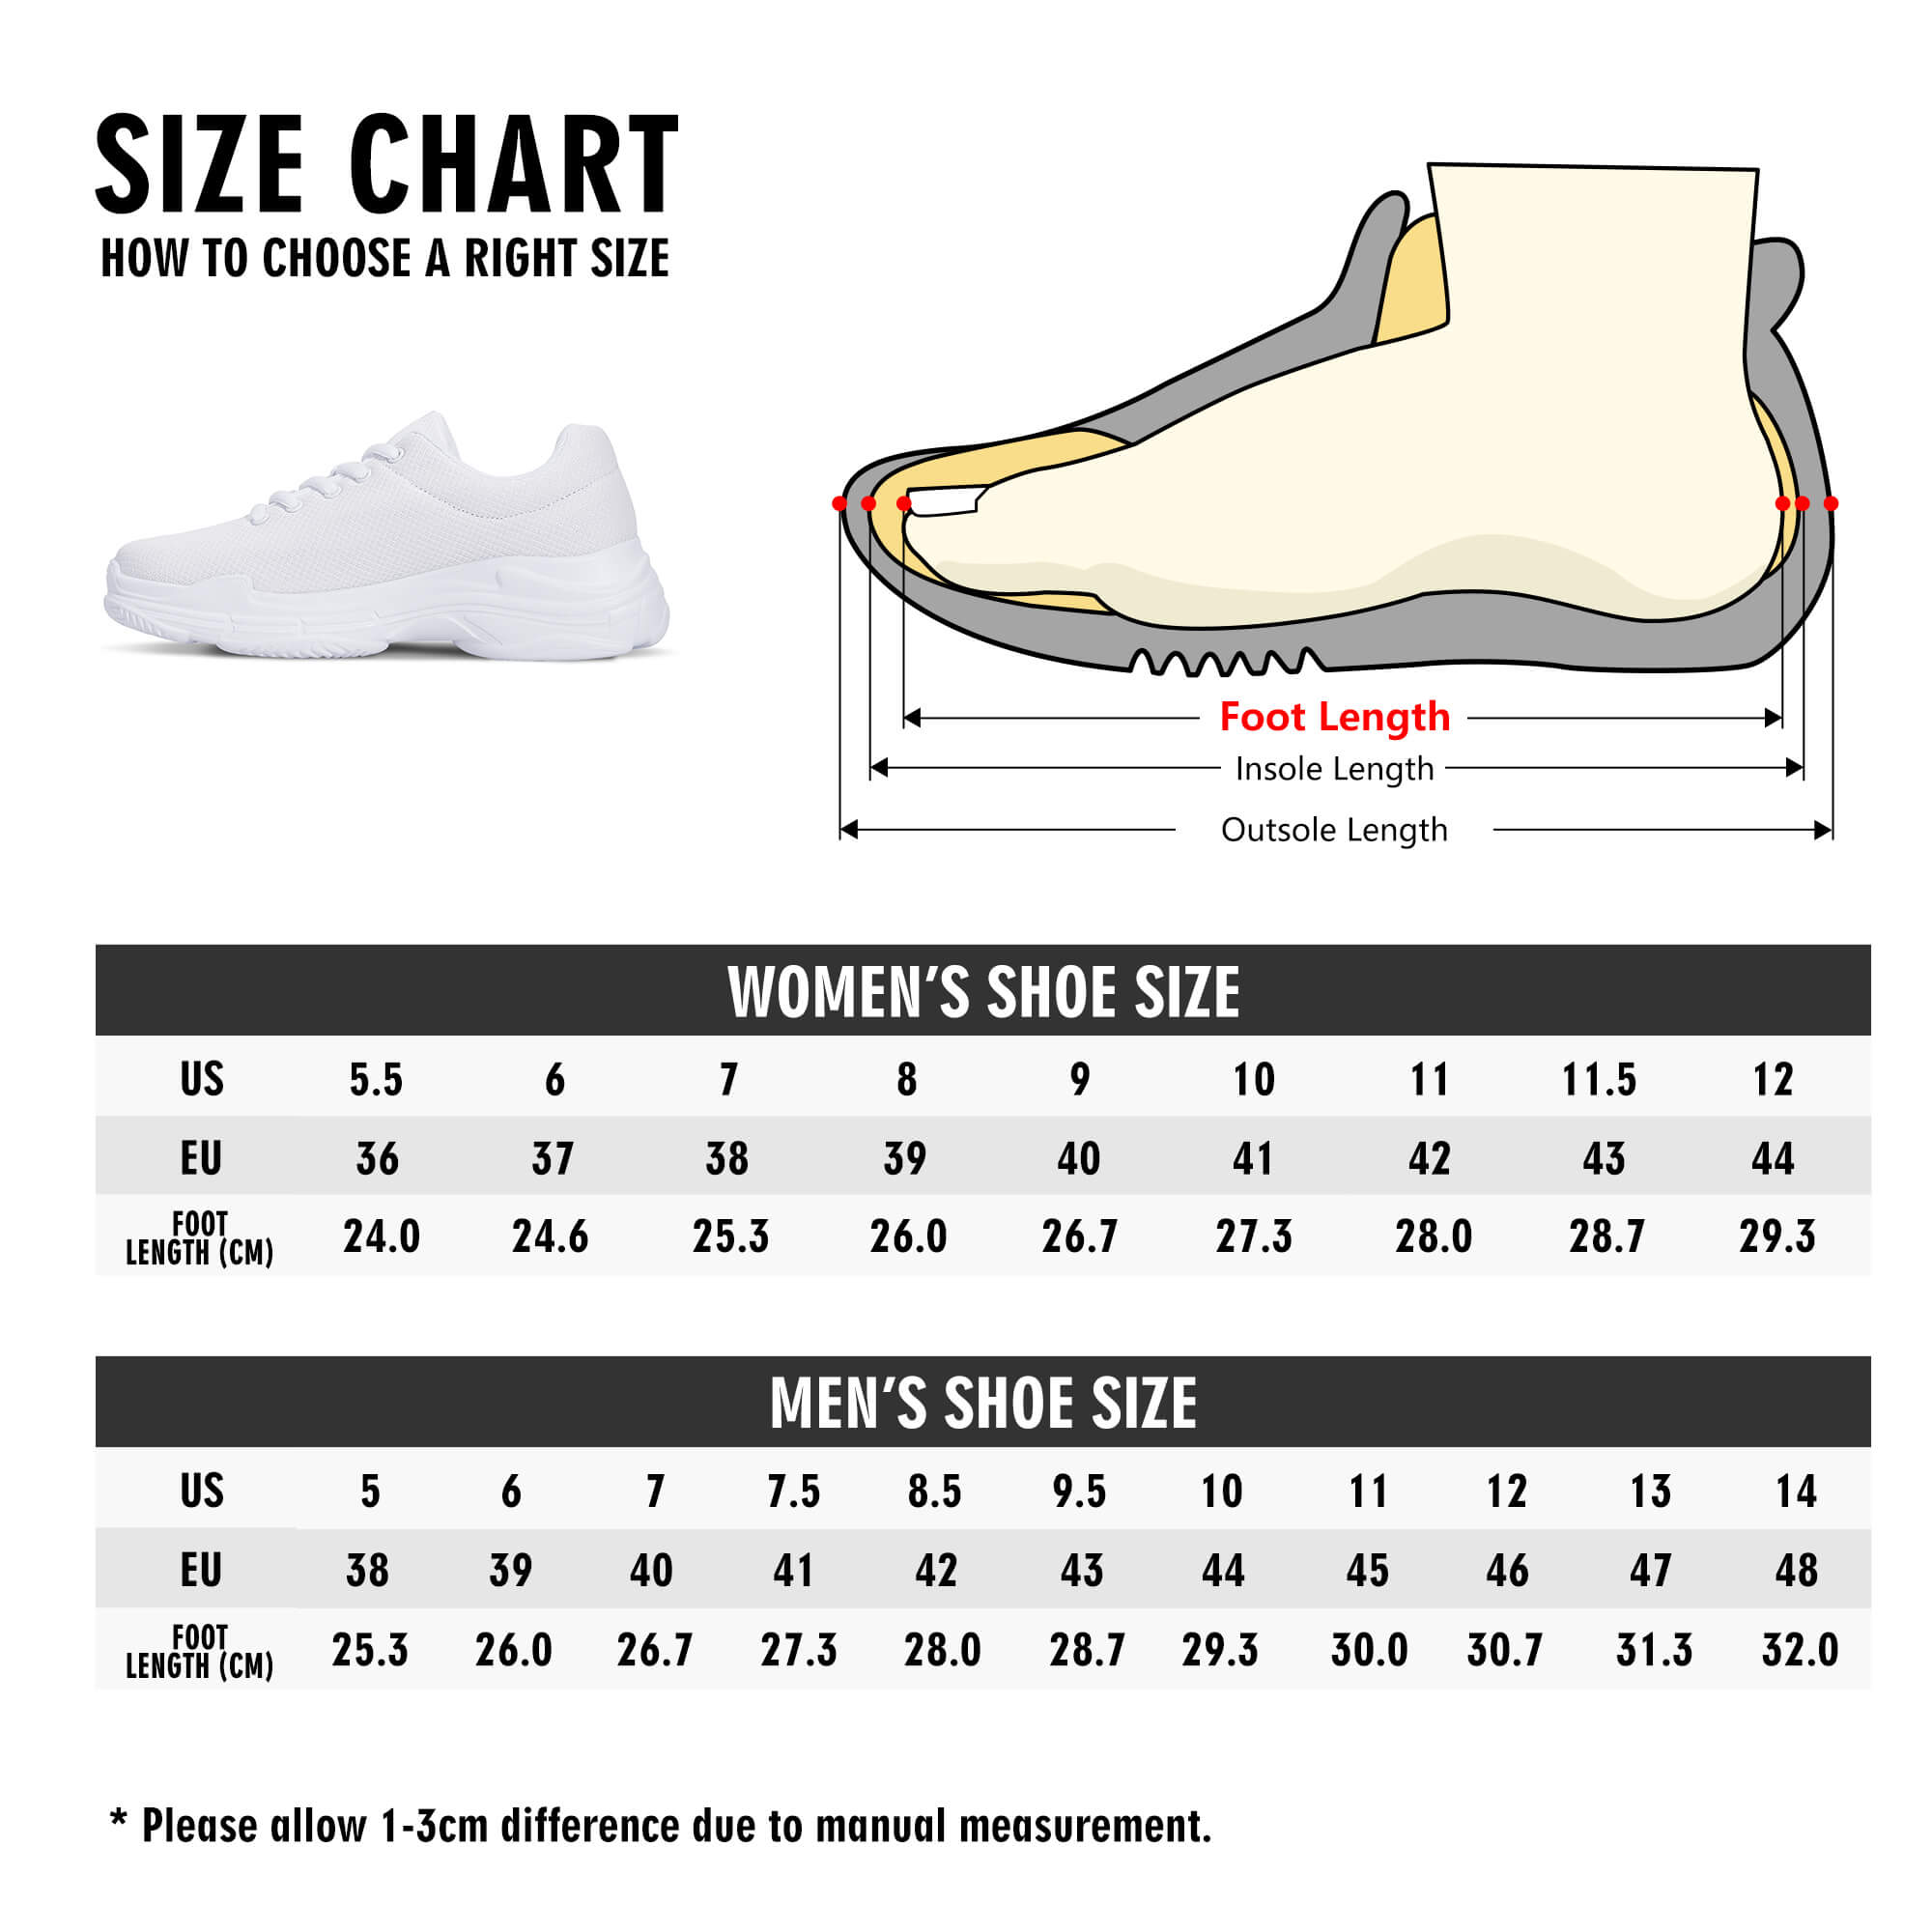 Customizable Chunky Sneakers (White) | Design your own | Shoe Zero